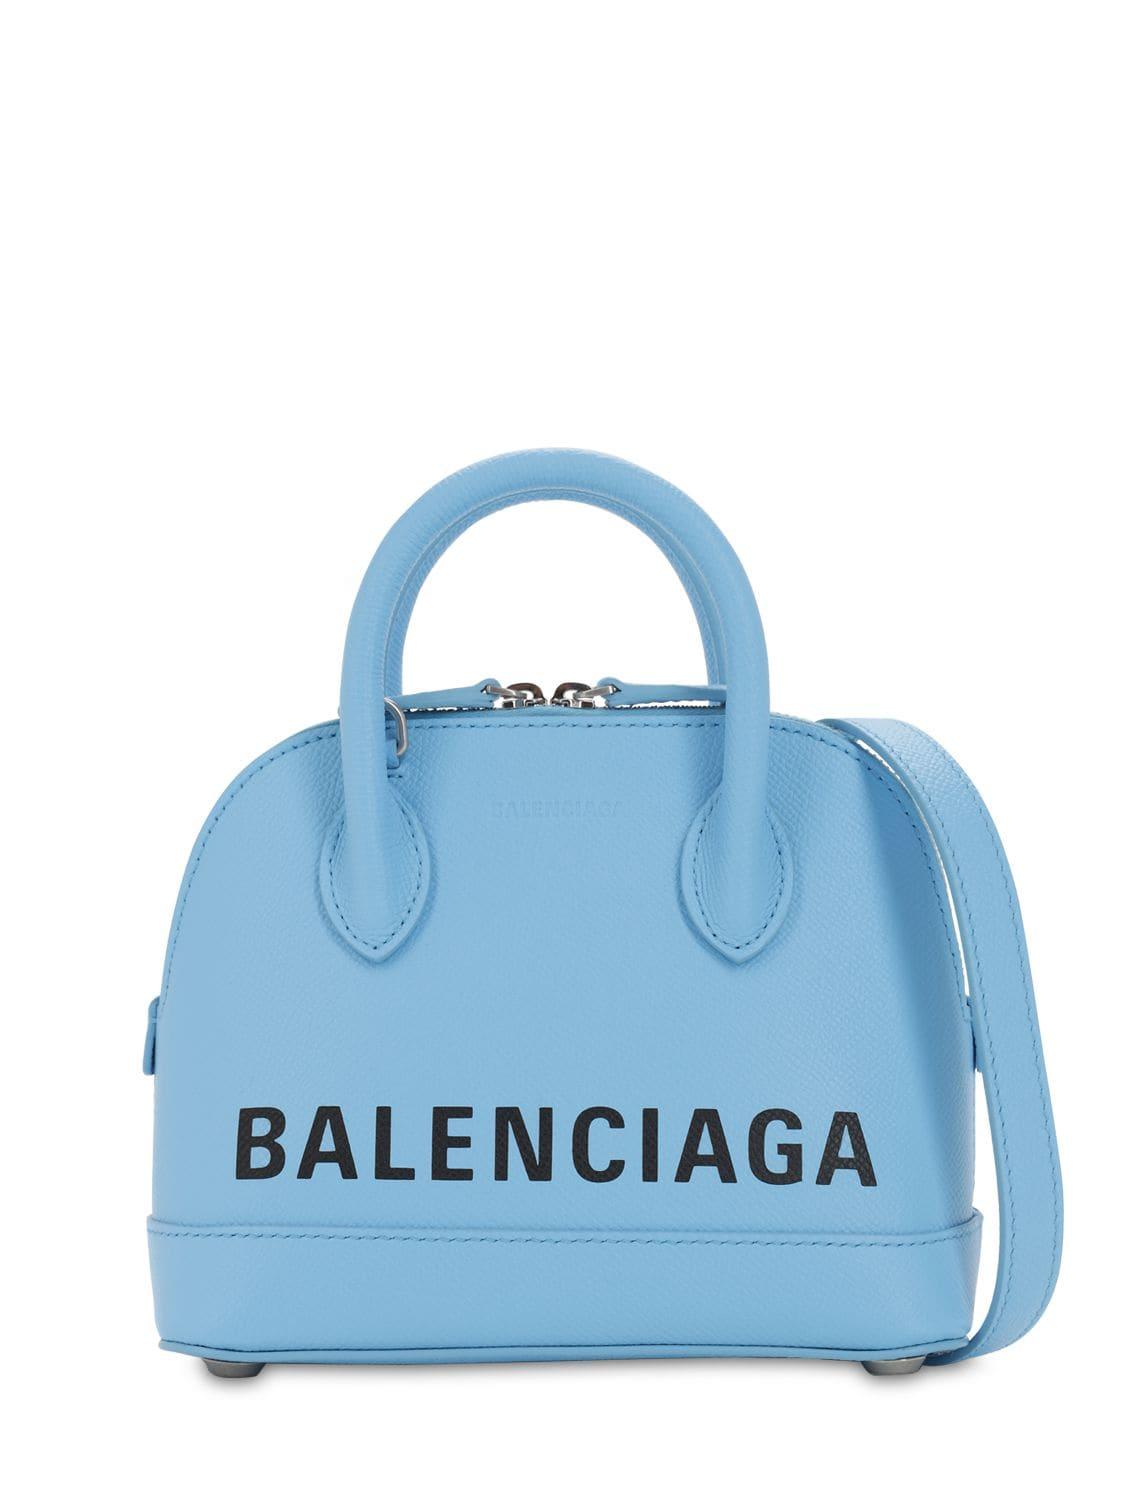 Balenciaga Xxs Ville Leather Top Handle Bag in Light Blue (Blue) | Lyst